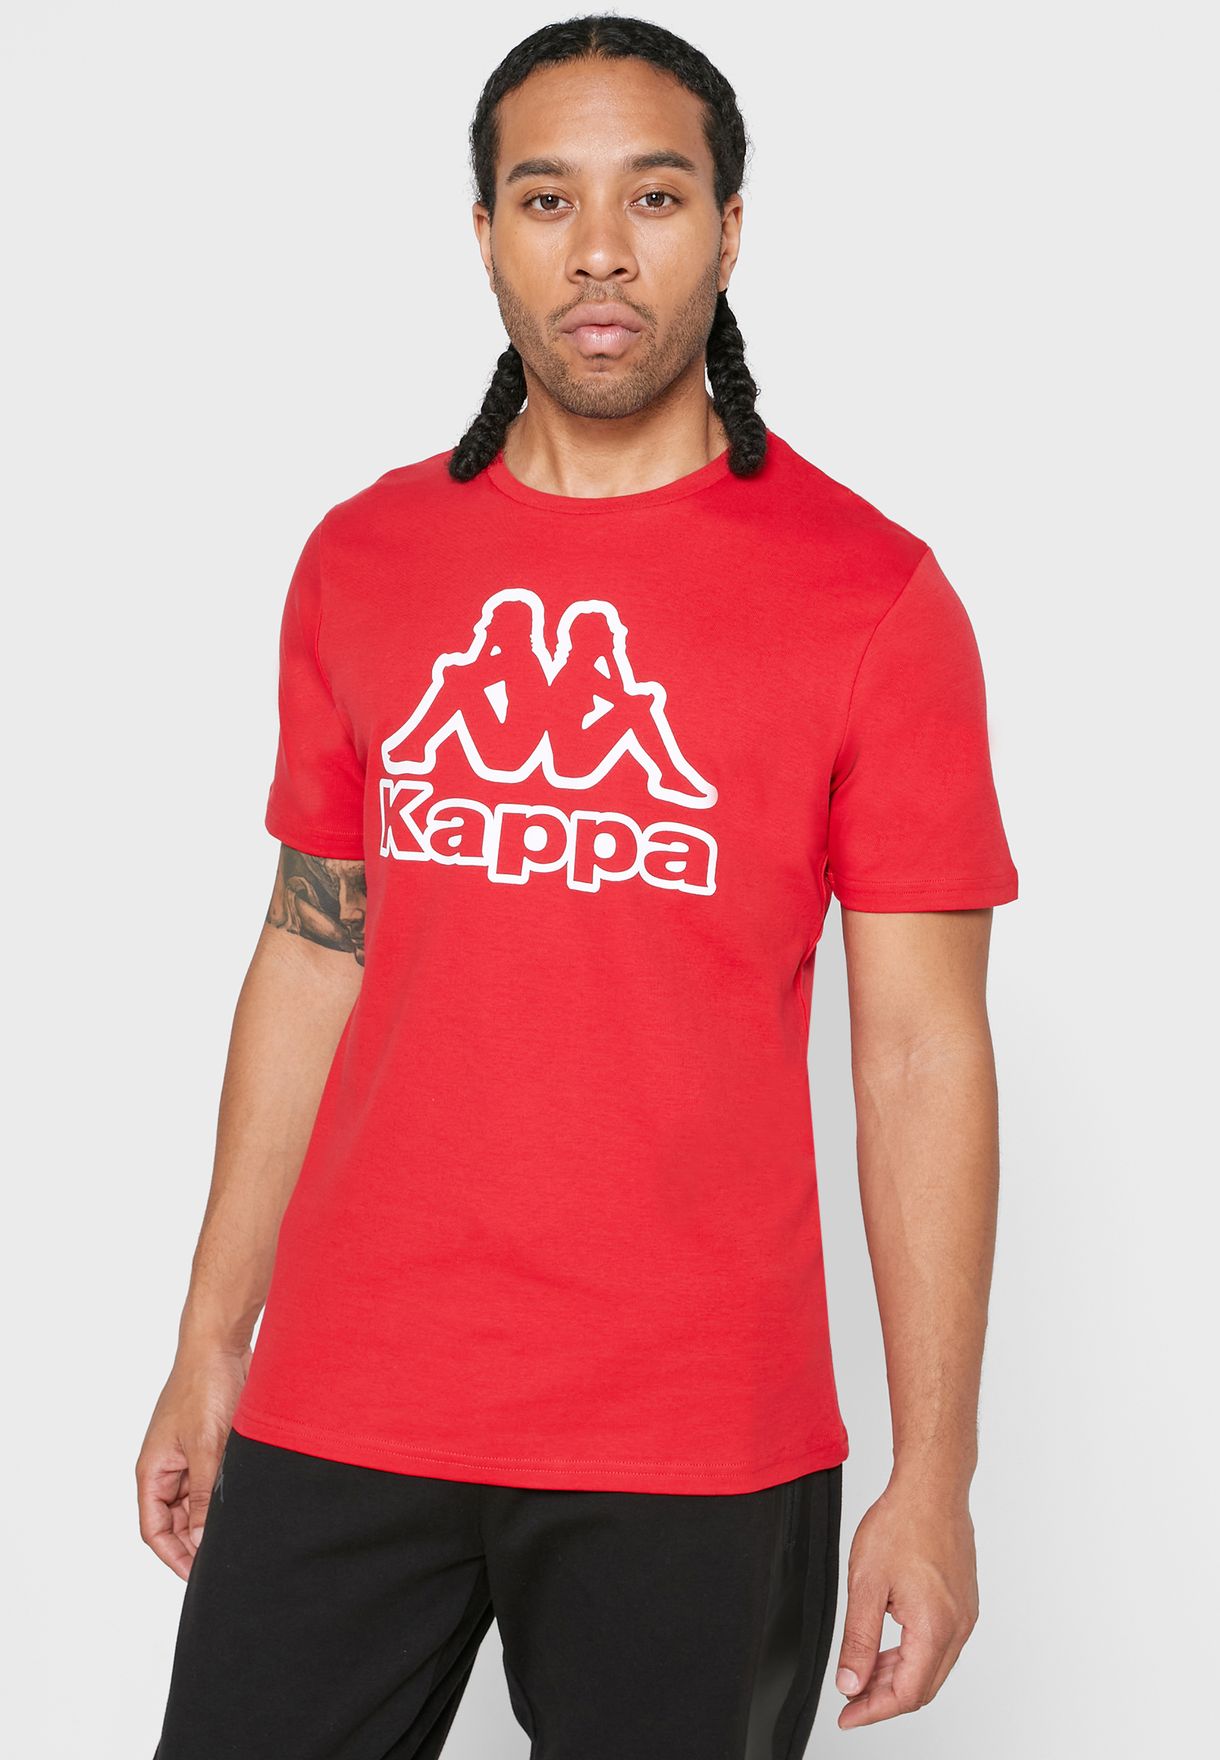 kappa red t shirt